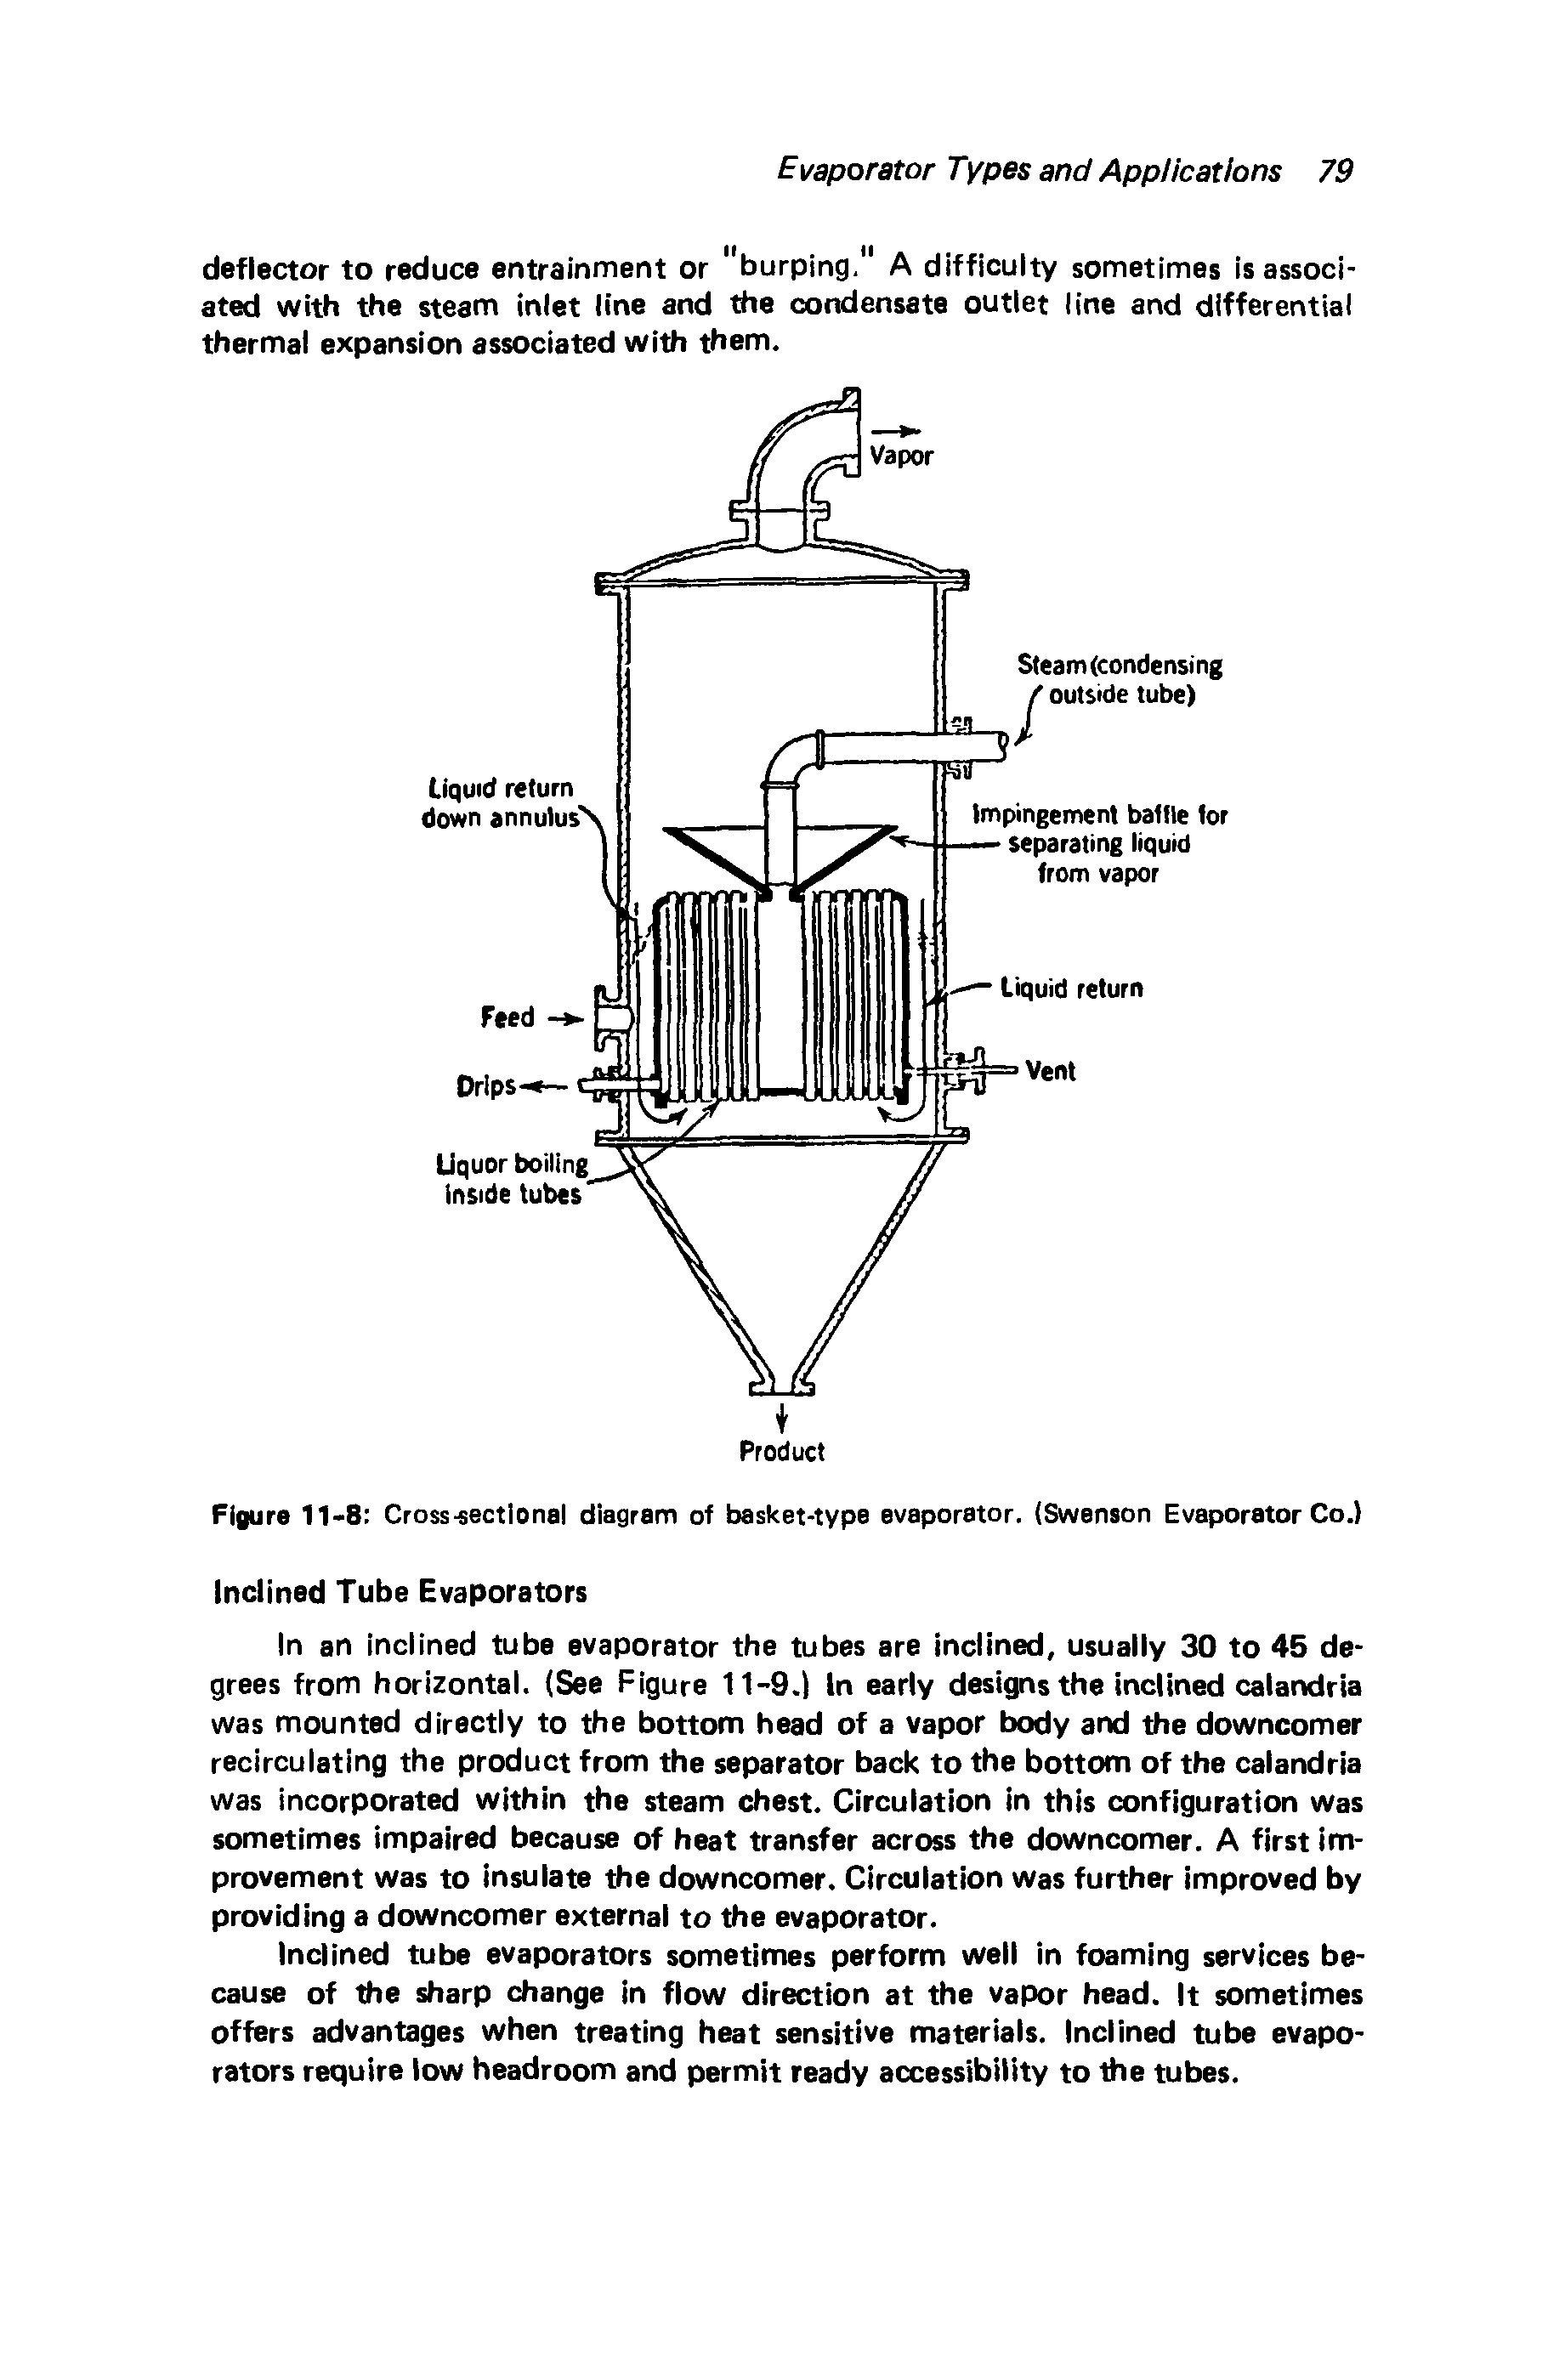 Figure 11>8 Crosseectlonal diagram of basket-type evaporator. (Swenson Evaporator Co.)...